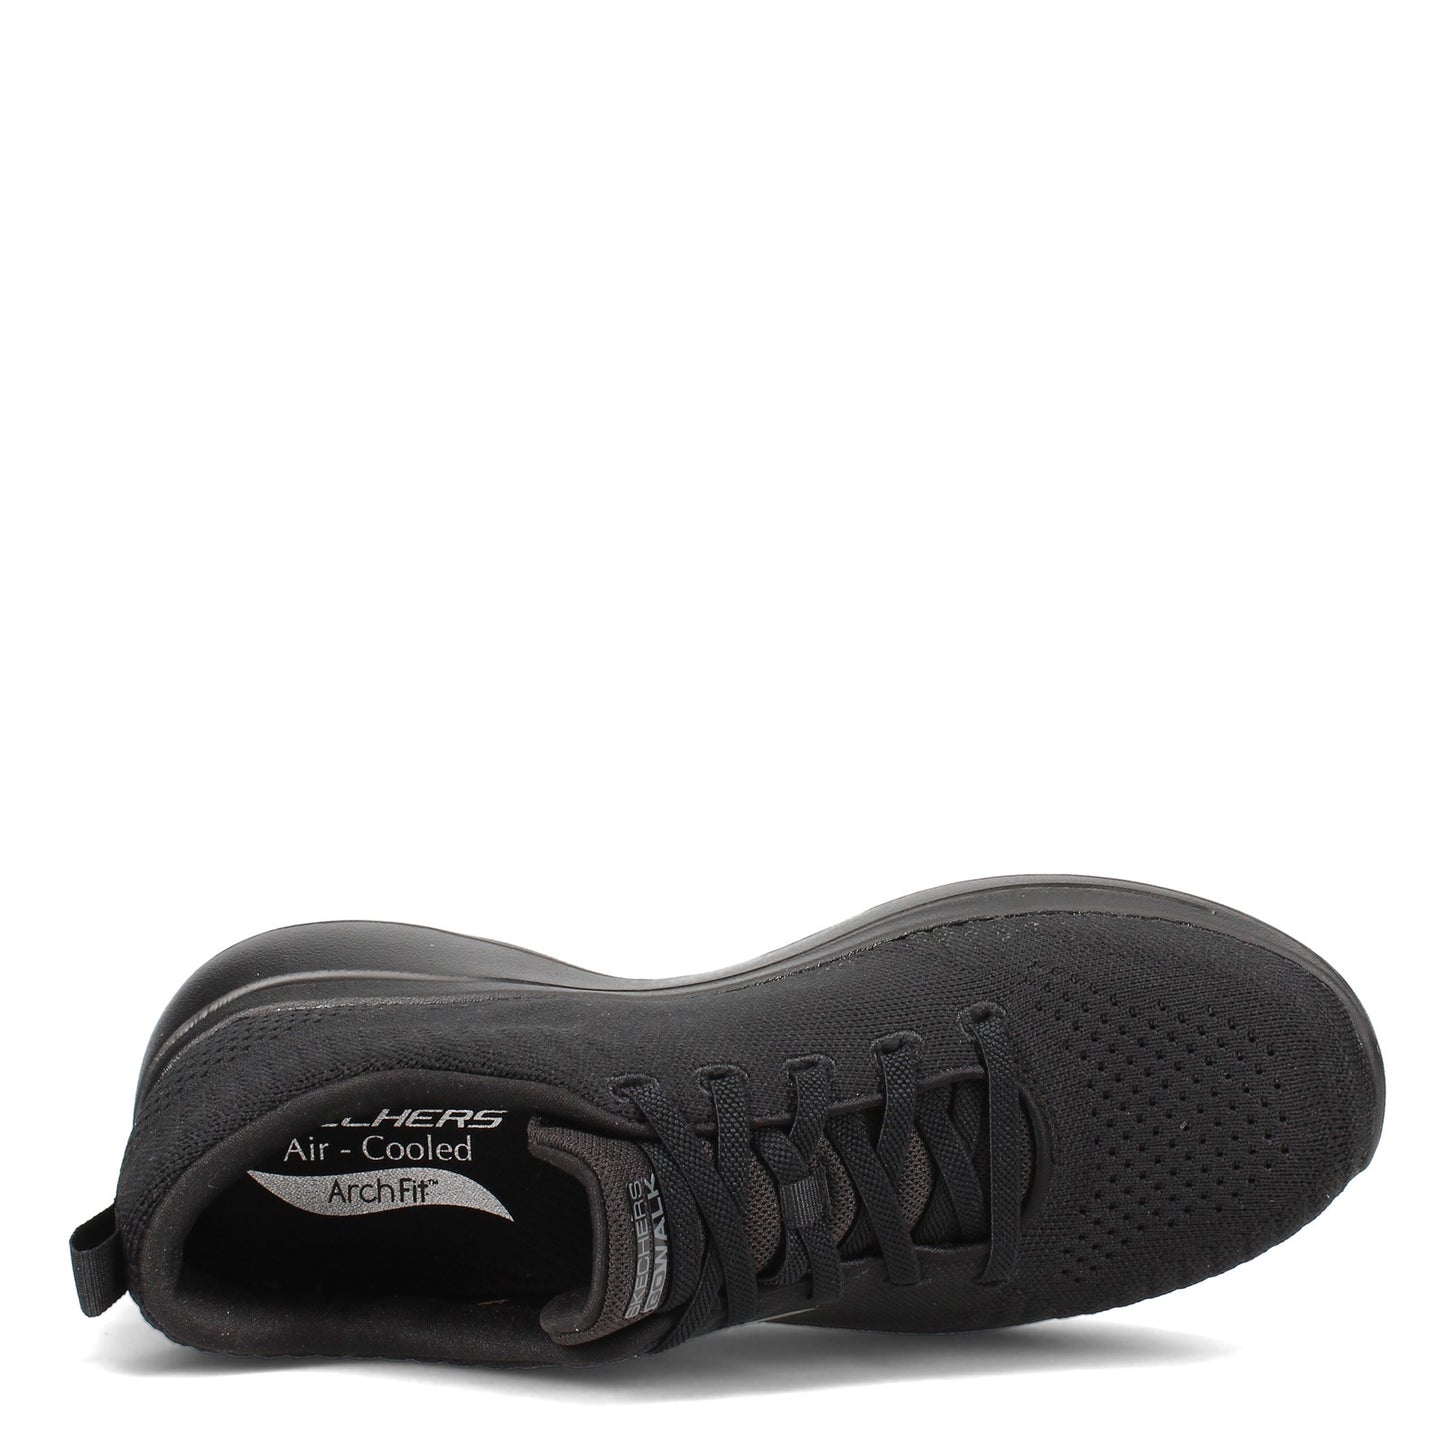 Peltz Shoes  Men's Skechers GOwalk Arch Fit - Grand Select Sneaker BLACK 216126-BBK